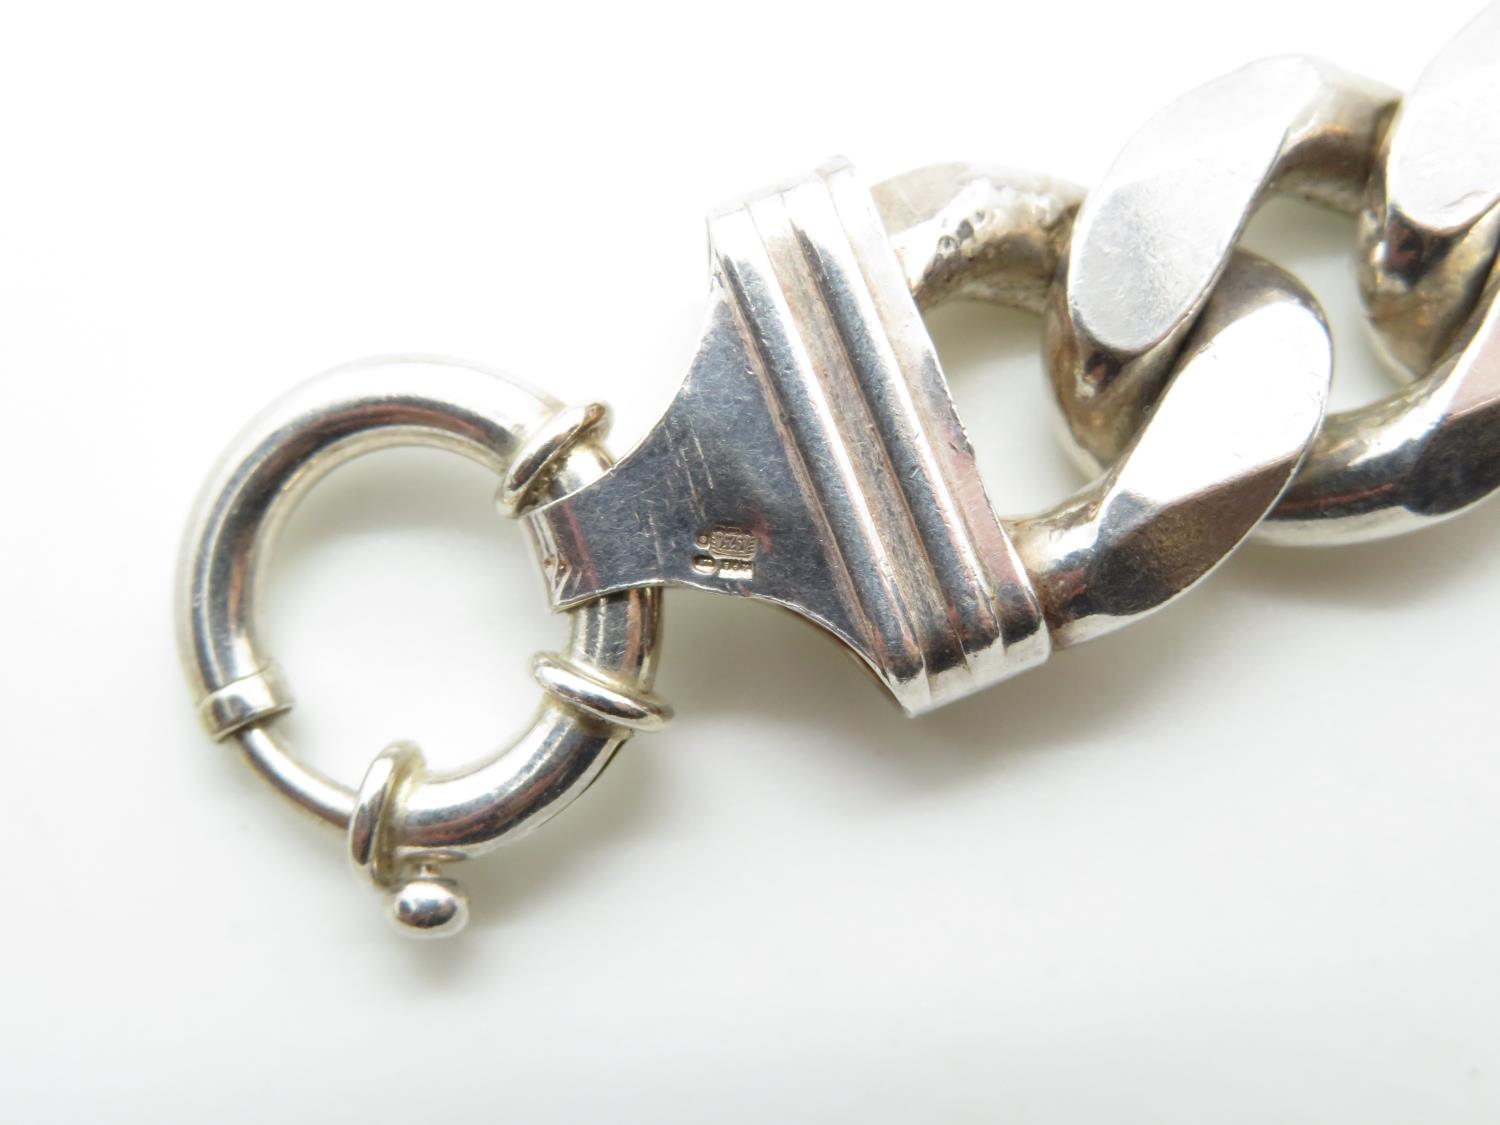 Chunky men's silver bracelet 8" long 105.4g - Image 2 of 2